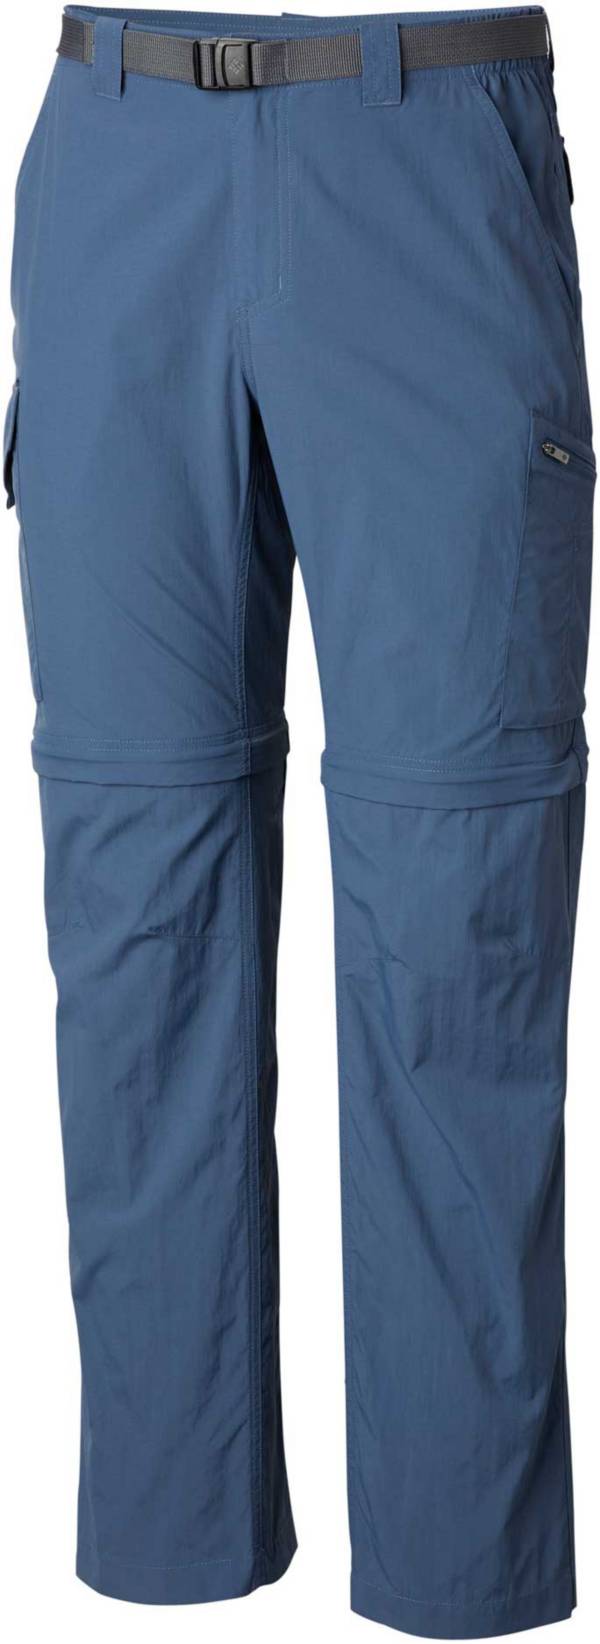 Columbia Men's Silver Ridge Convertible Pant product image